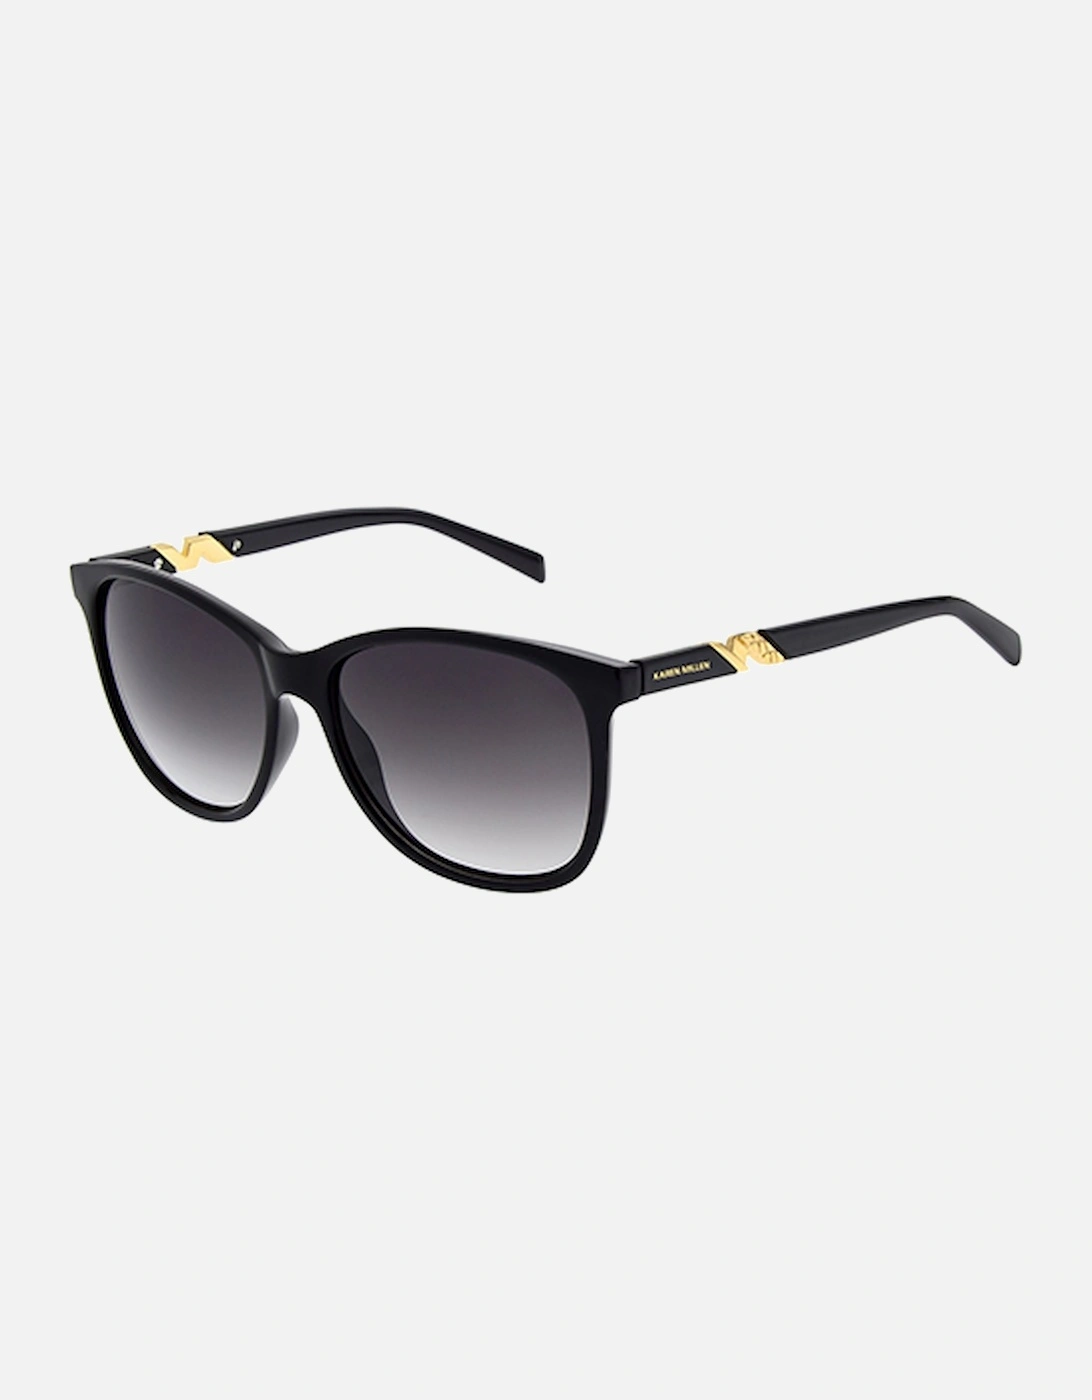 Sunglasses 18665 Black